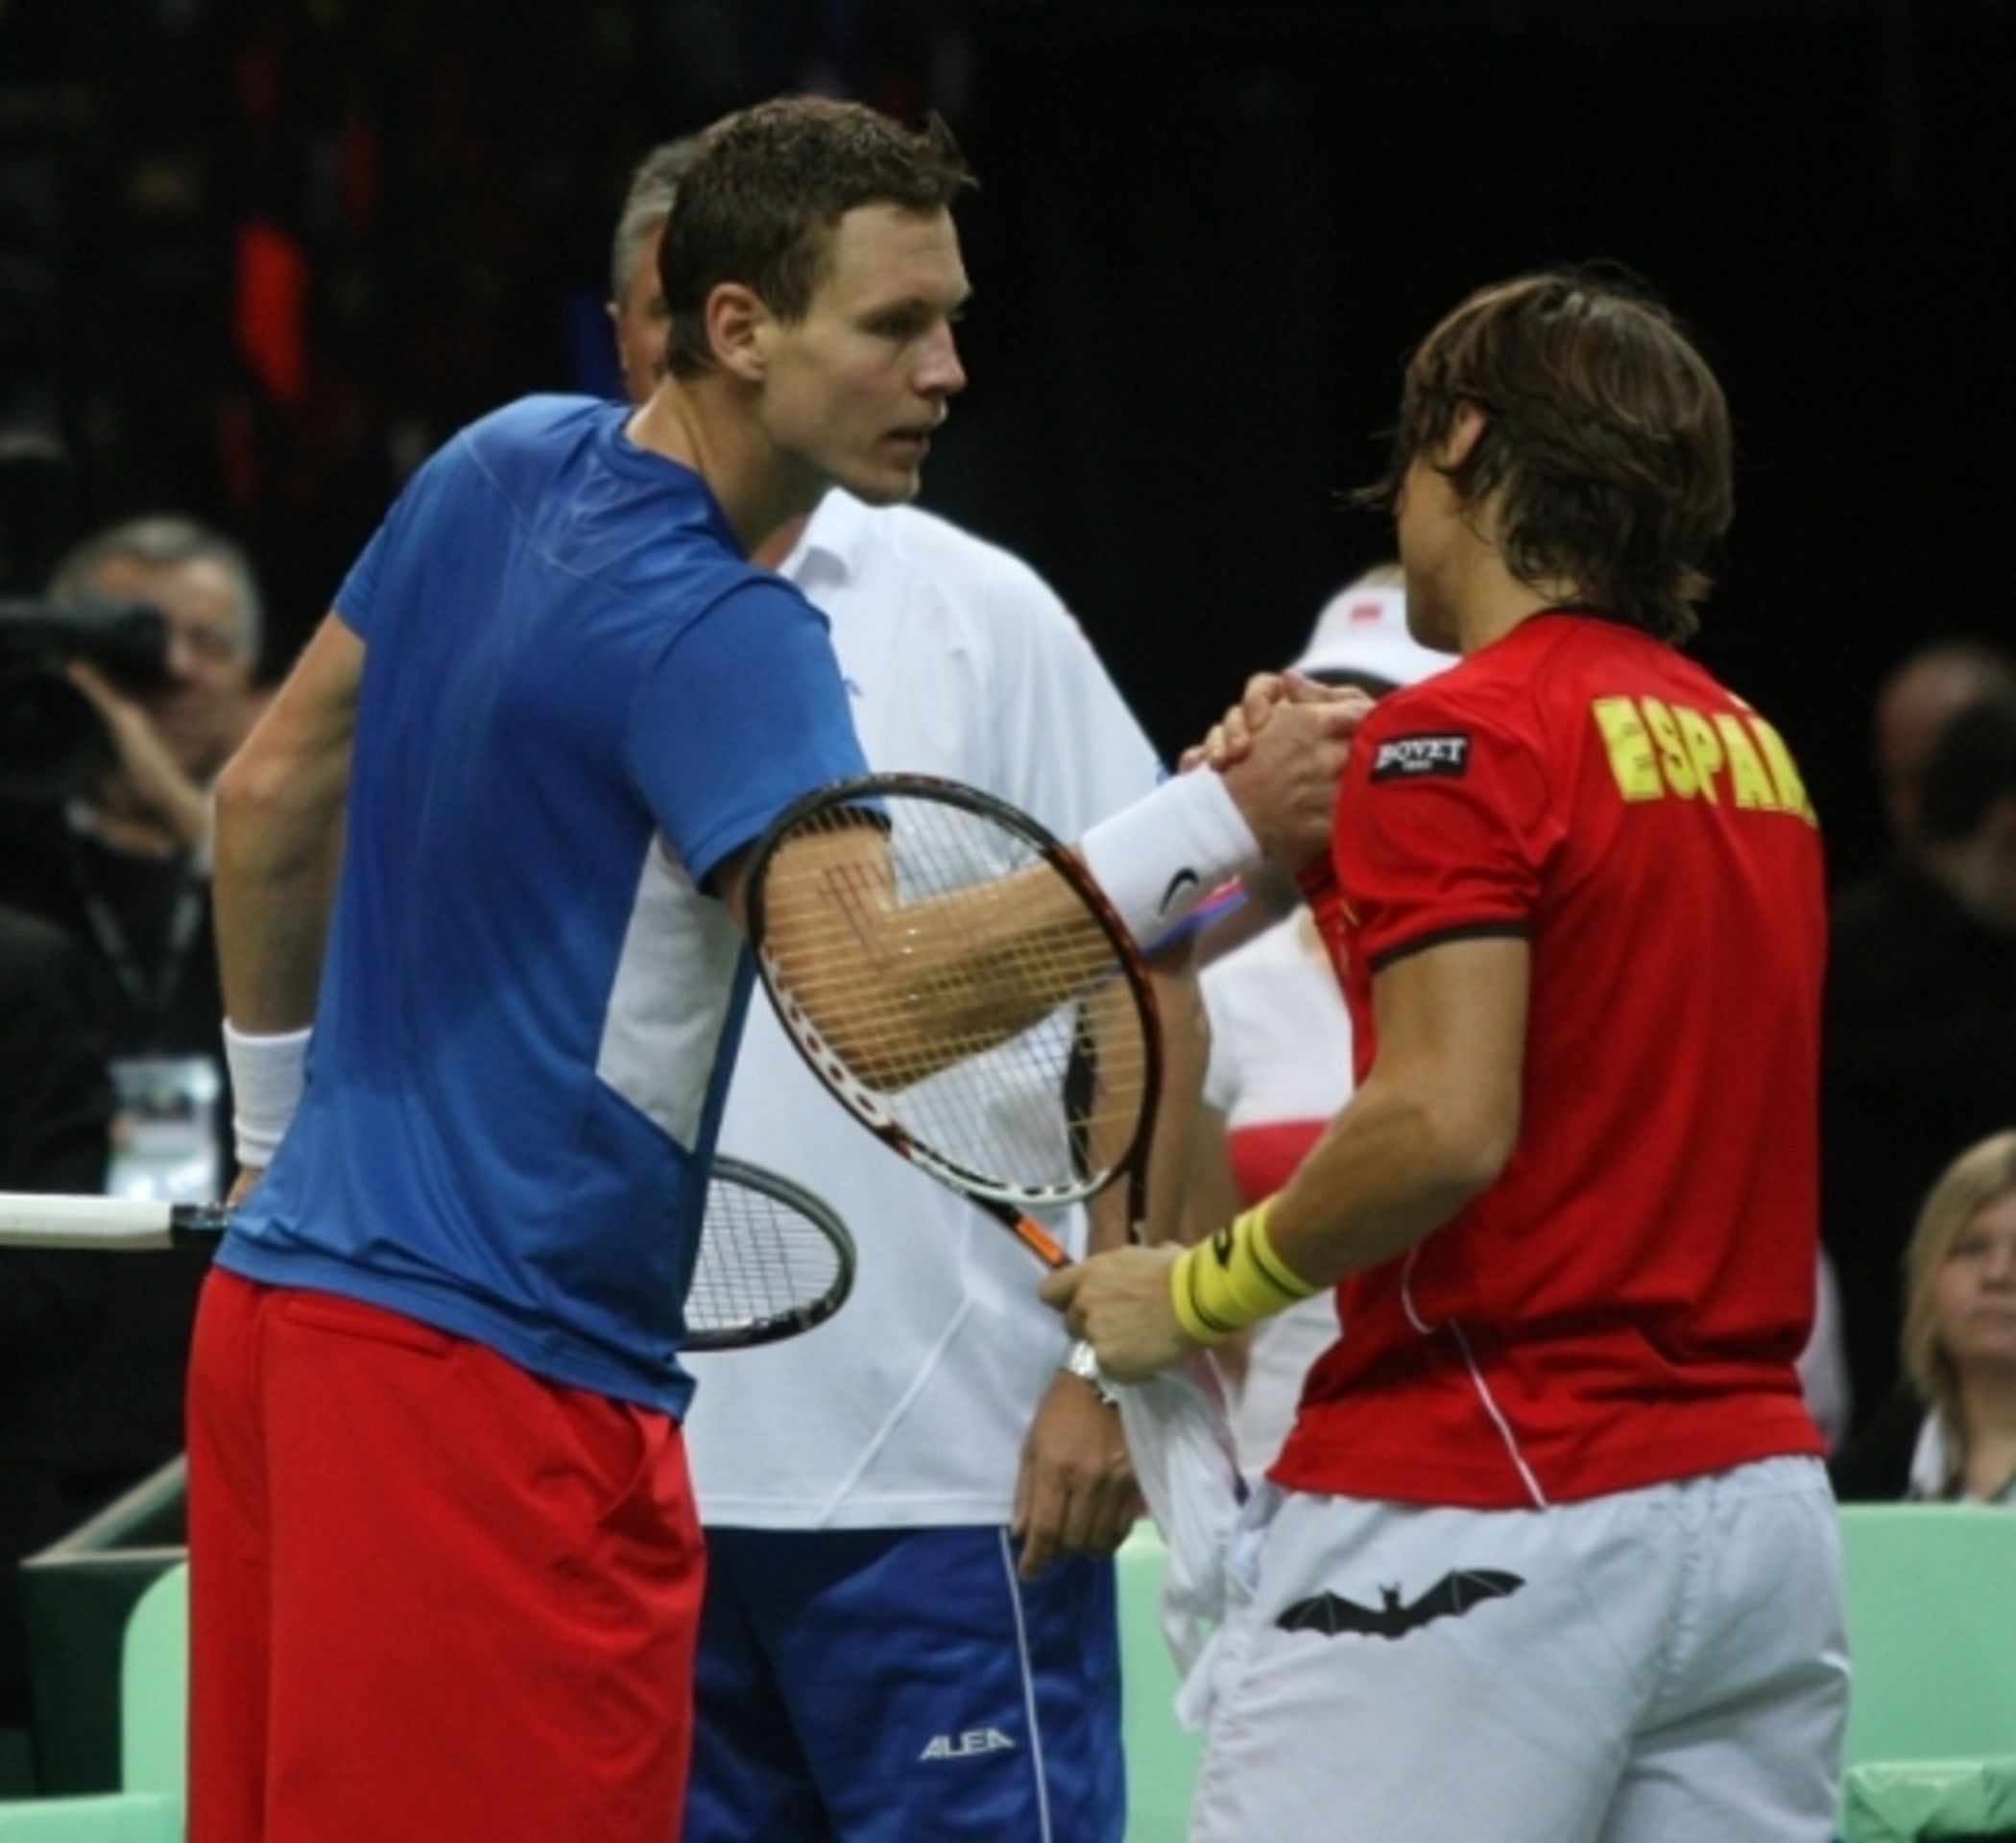 GALERIE: Tomáš Berdych vs. David Ferrer - 1 - GALERIE: Tomáš Berdych vs. David Ferrer (12/12)